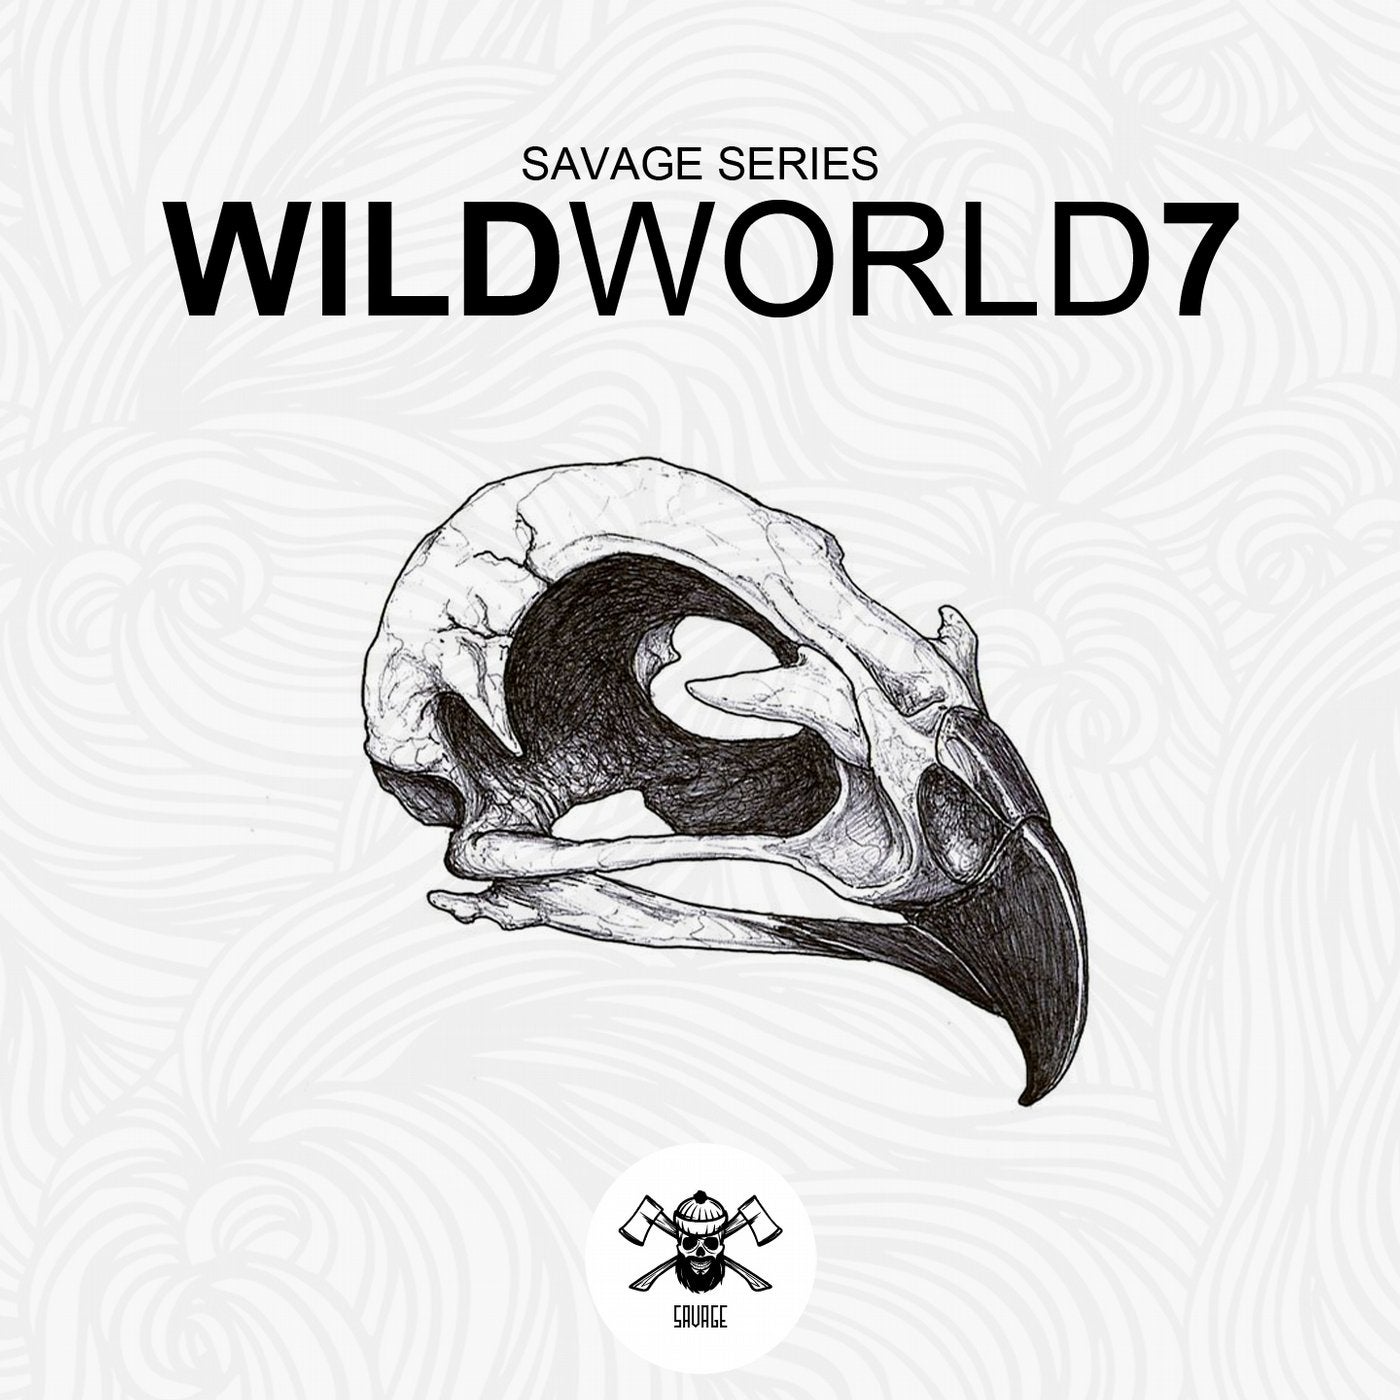 WildWorld7 (Savage Series)